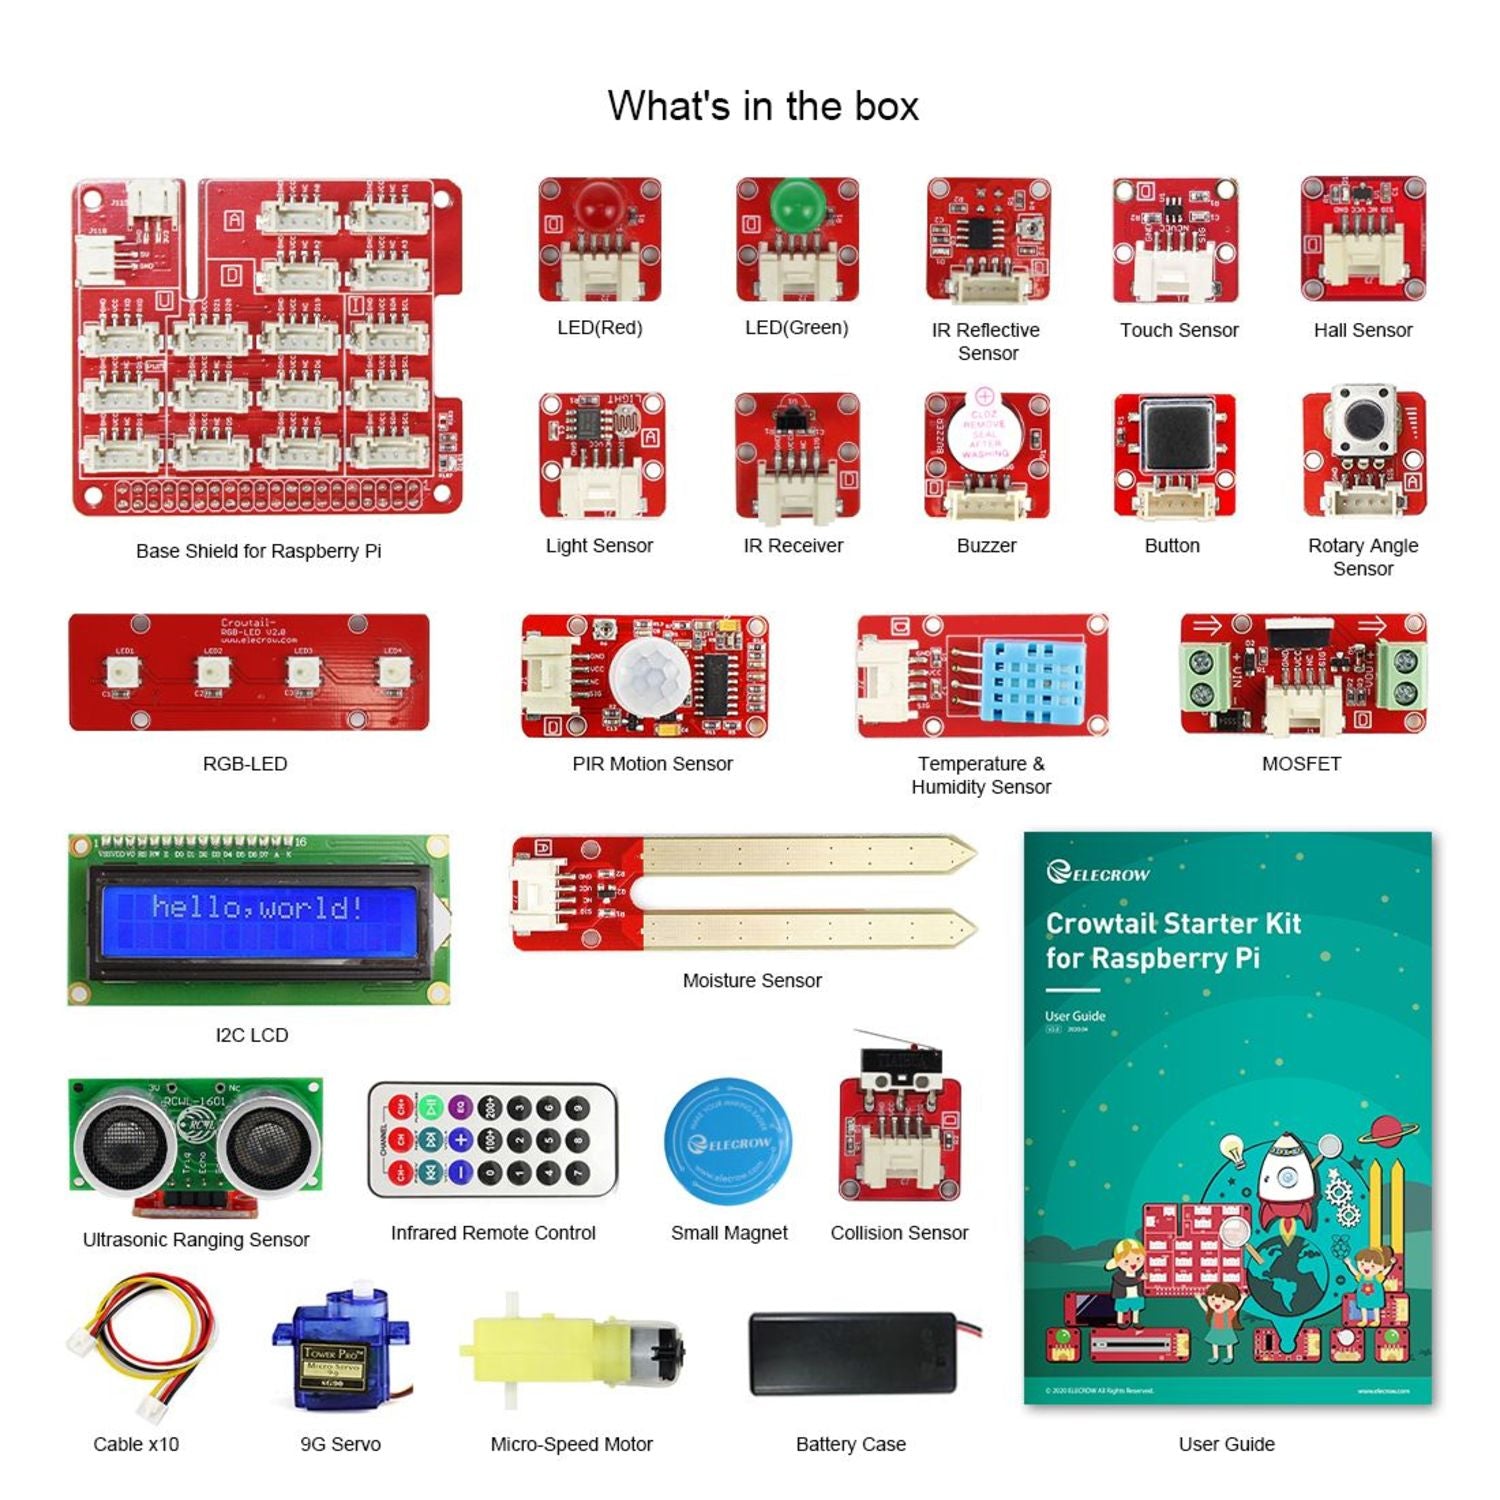 Crowtail Starter Kit for Raspberry Pi